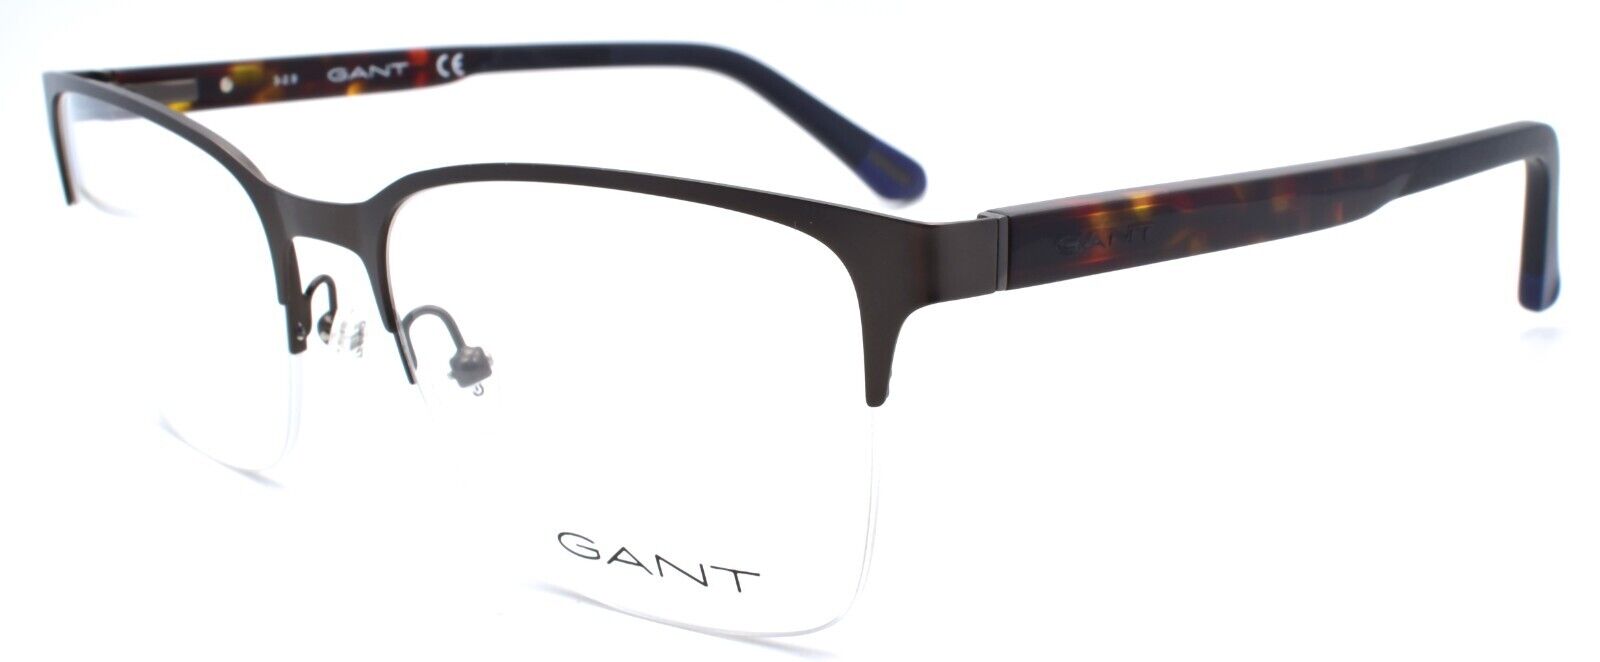 1-GANT GA3202 009 Men's Eyeglasses Frames Half-rim 55-18-140 Matte Gunmetal-889214107206-IKSpecs